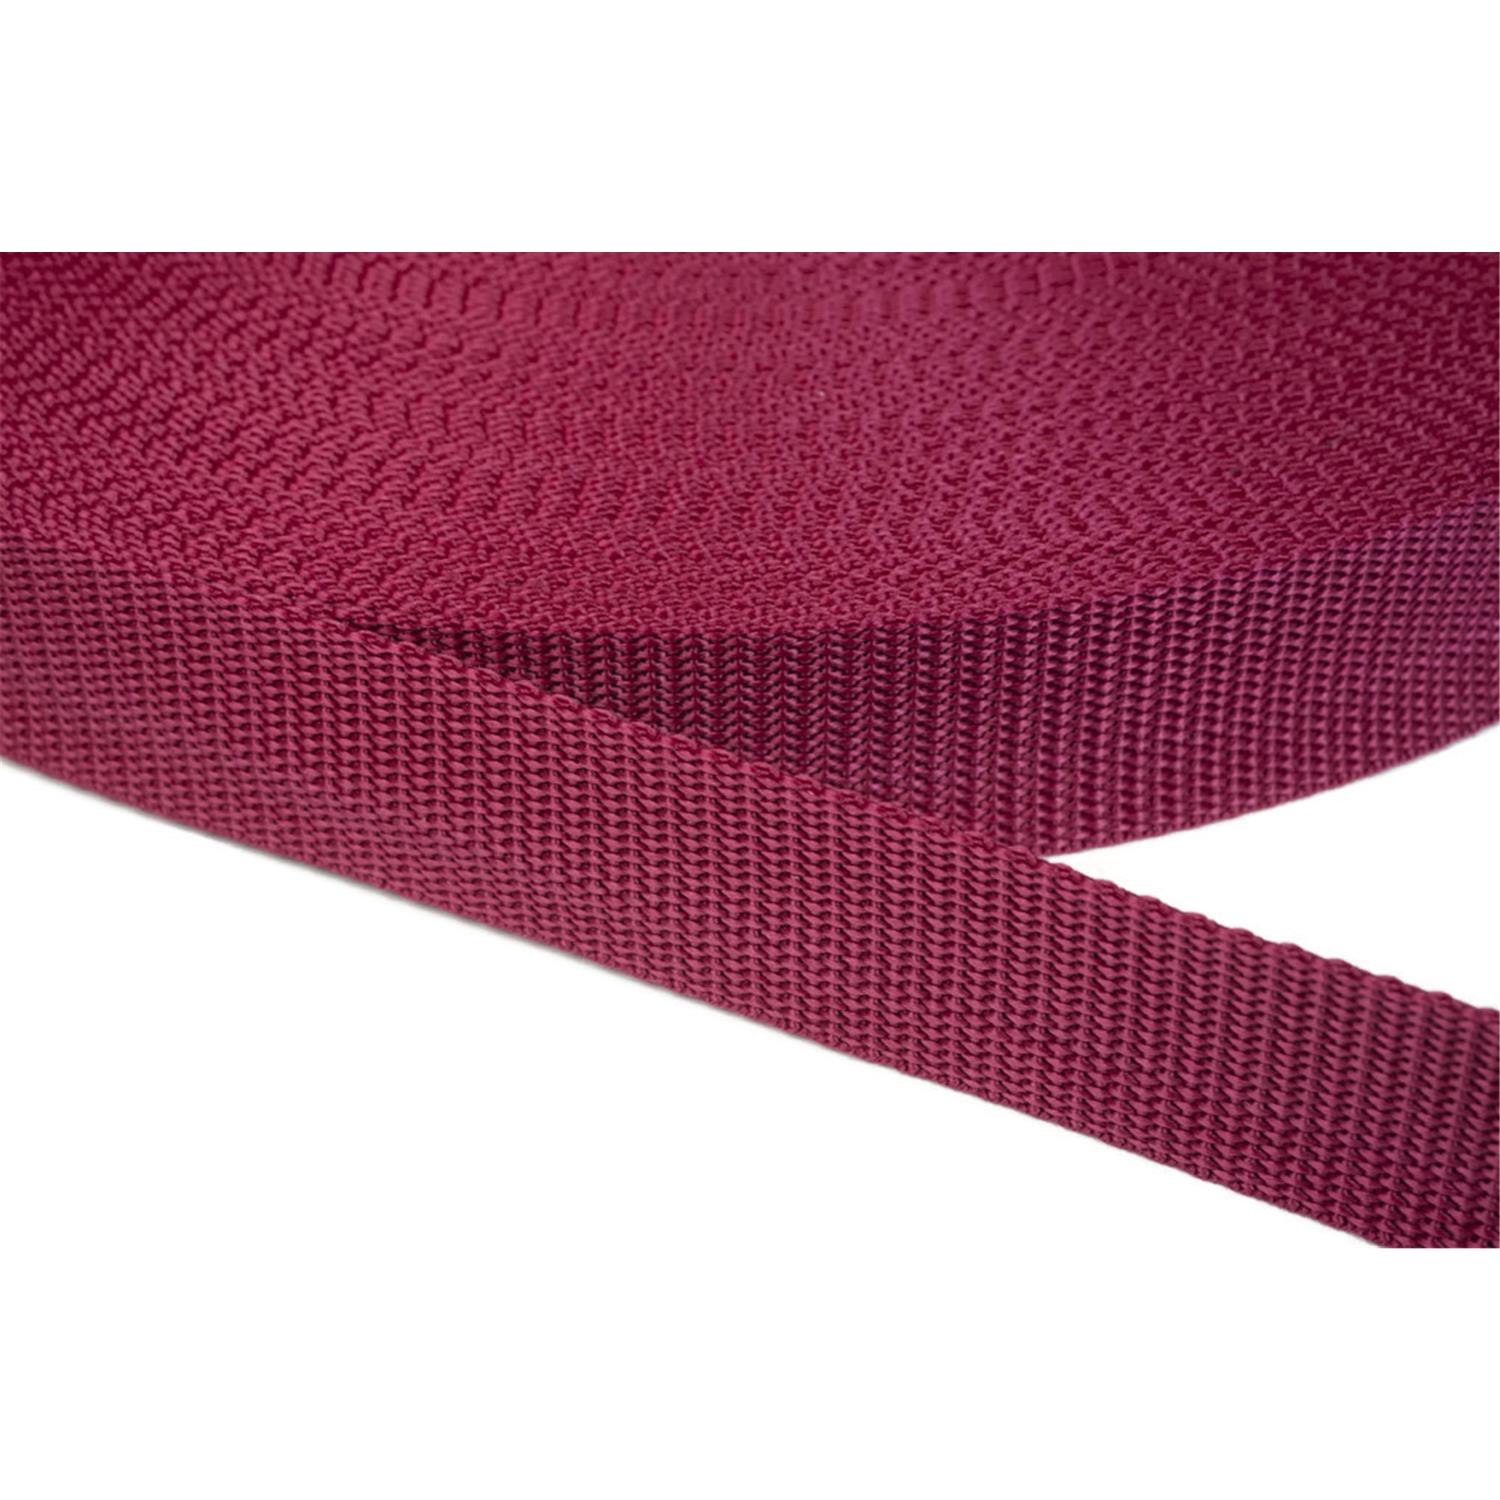 Gurtband 25mm breit aus Polypropylen in 41 Farben 21 - dunkelrot 12 Meter